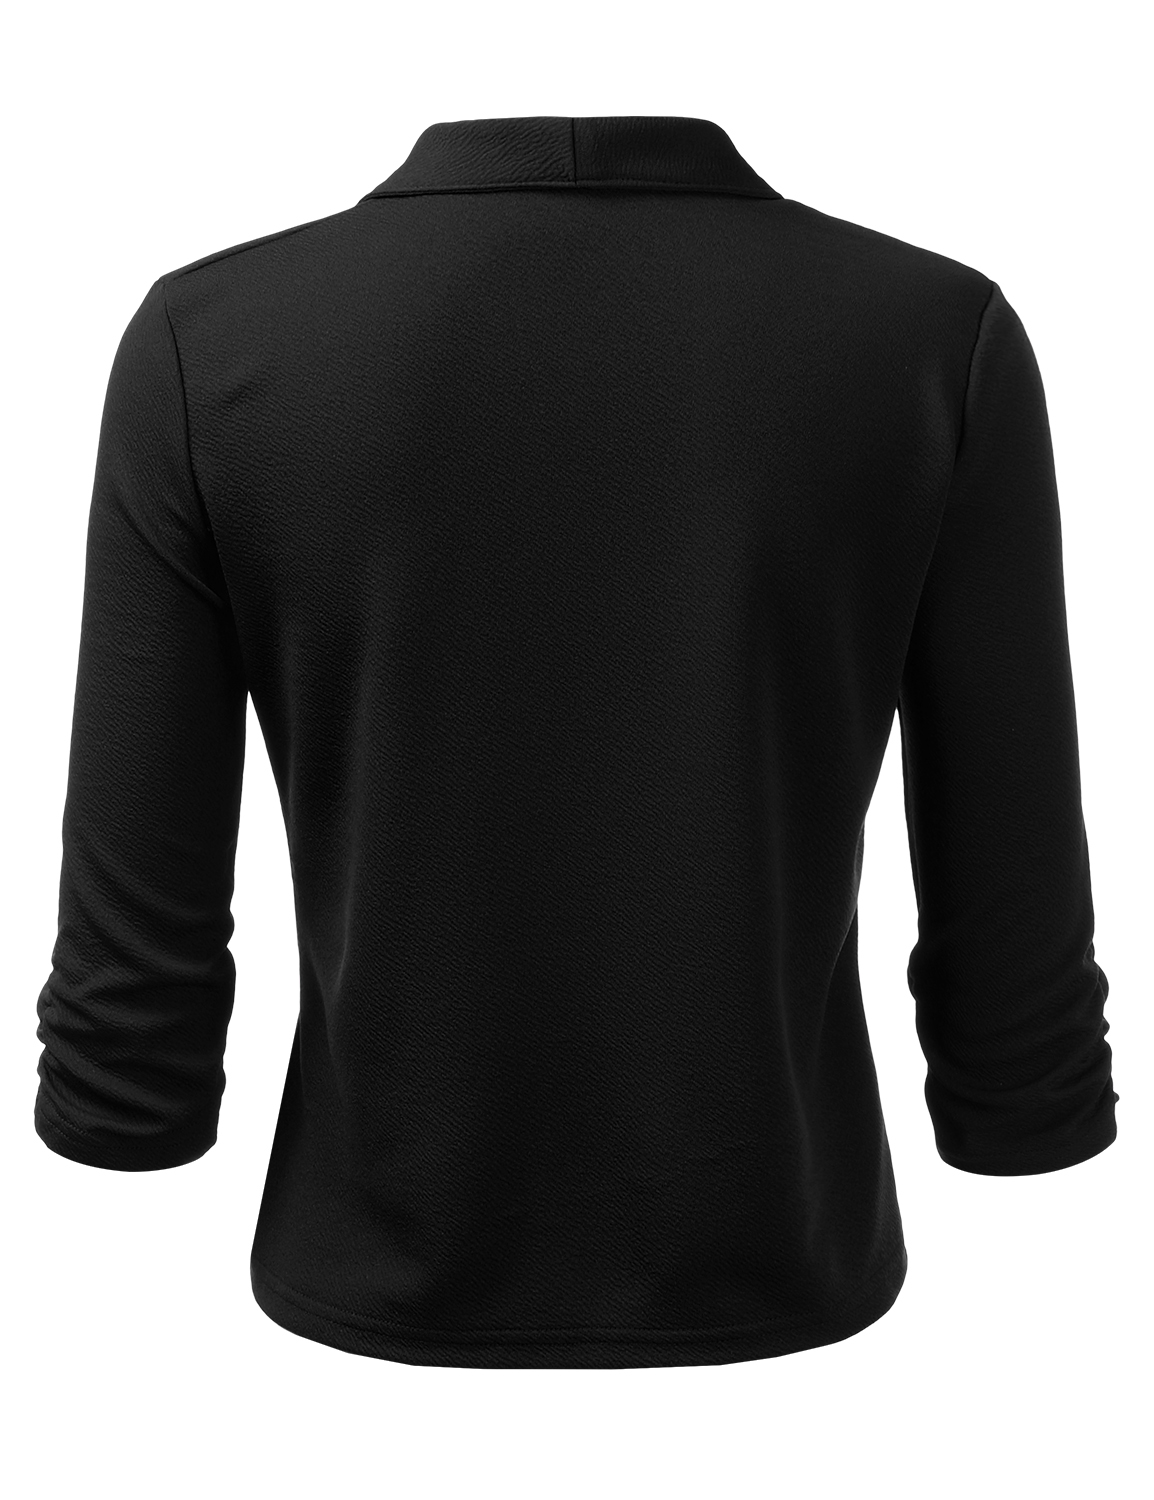 Doublju Women's Ruched 3/4 Sleeve Open Front Blazer Jacket with Plus ...